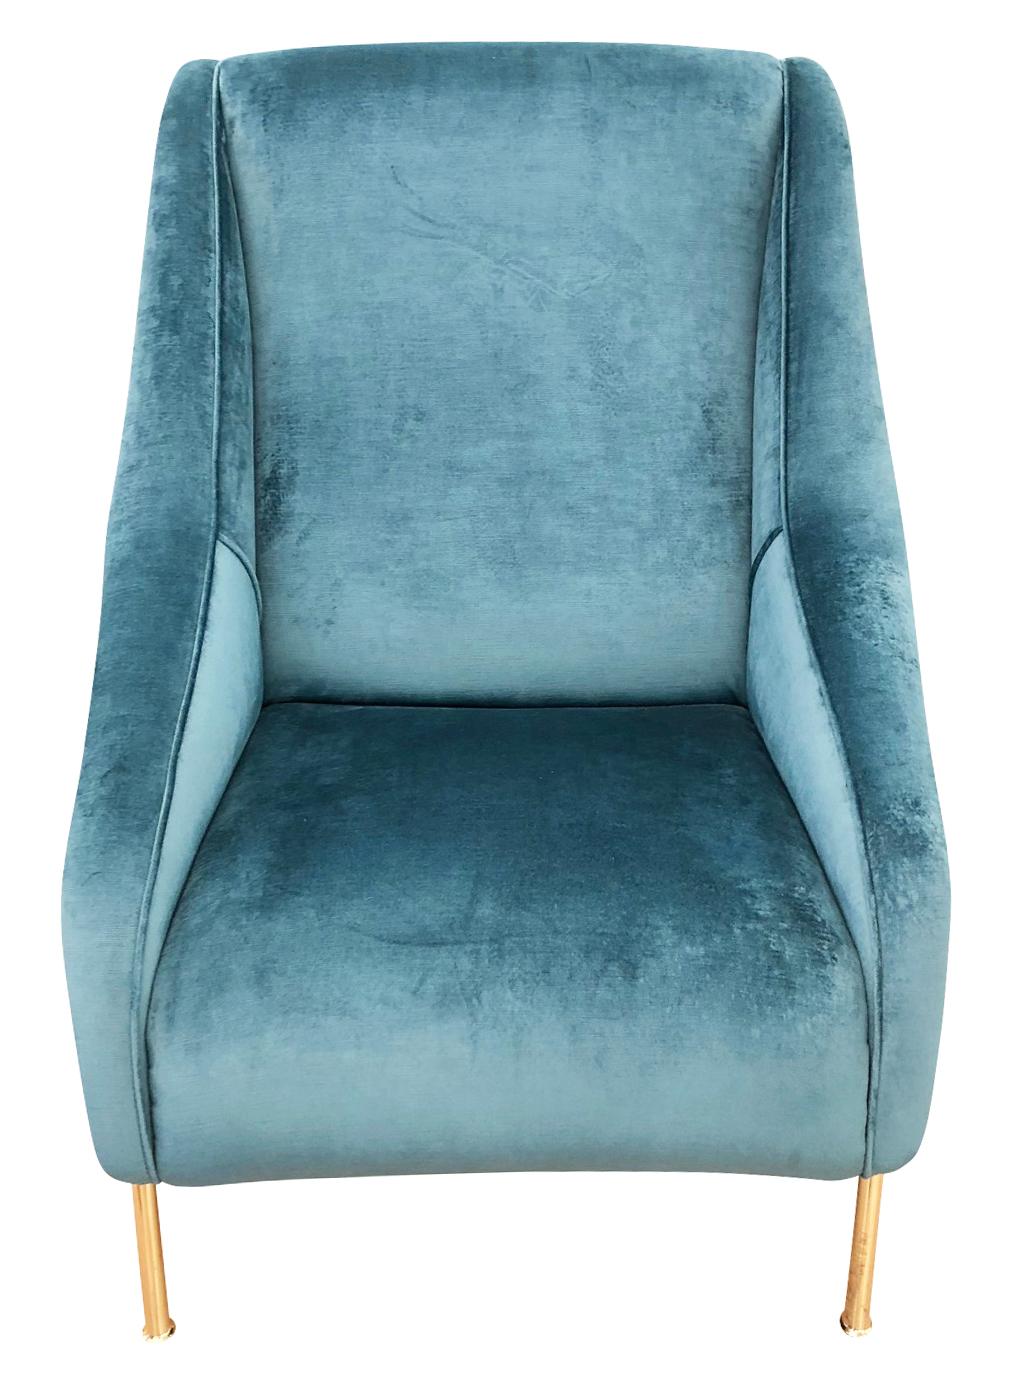 Mid-20th Century Italian Midcentury Lounge Chair